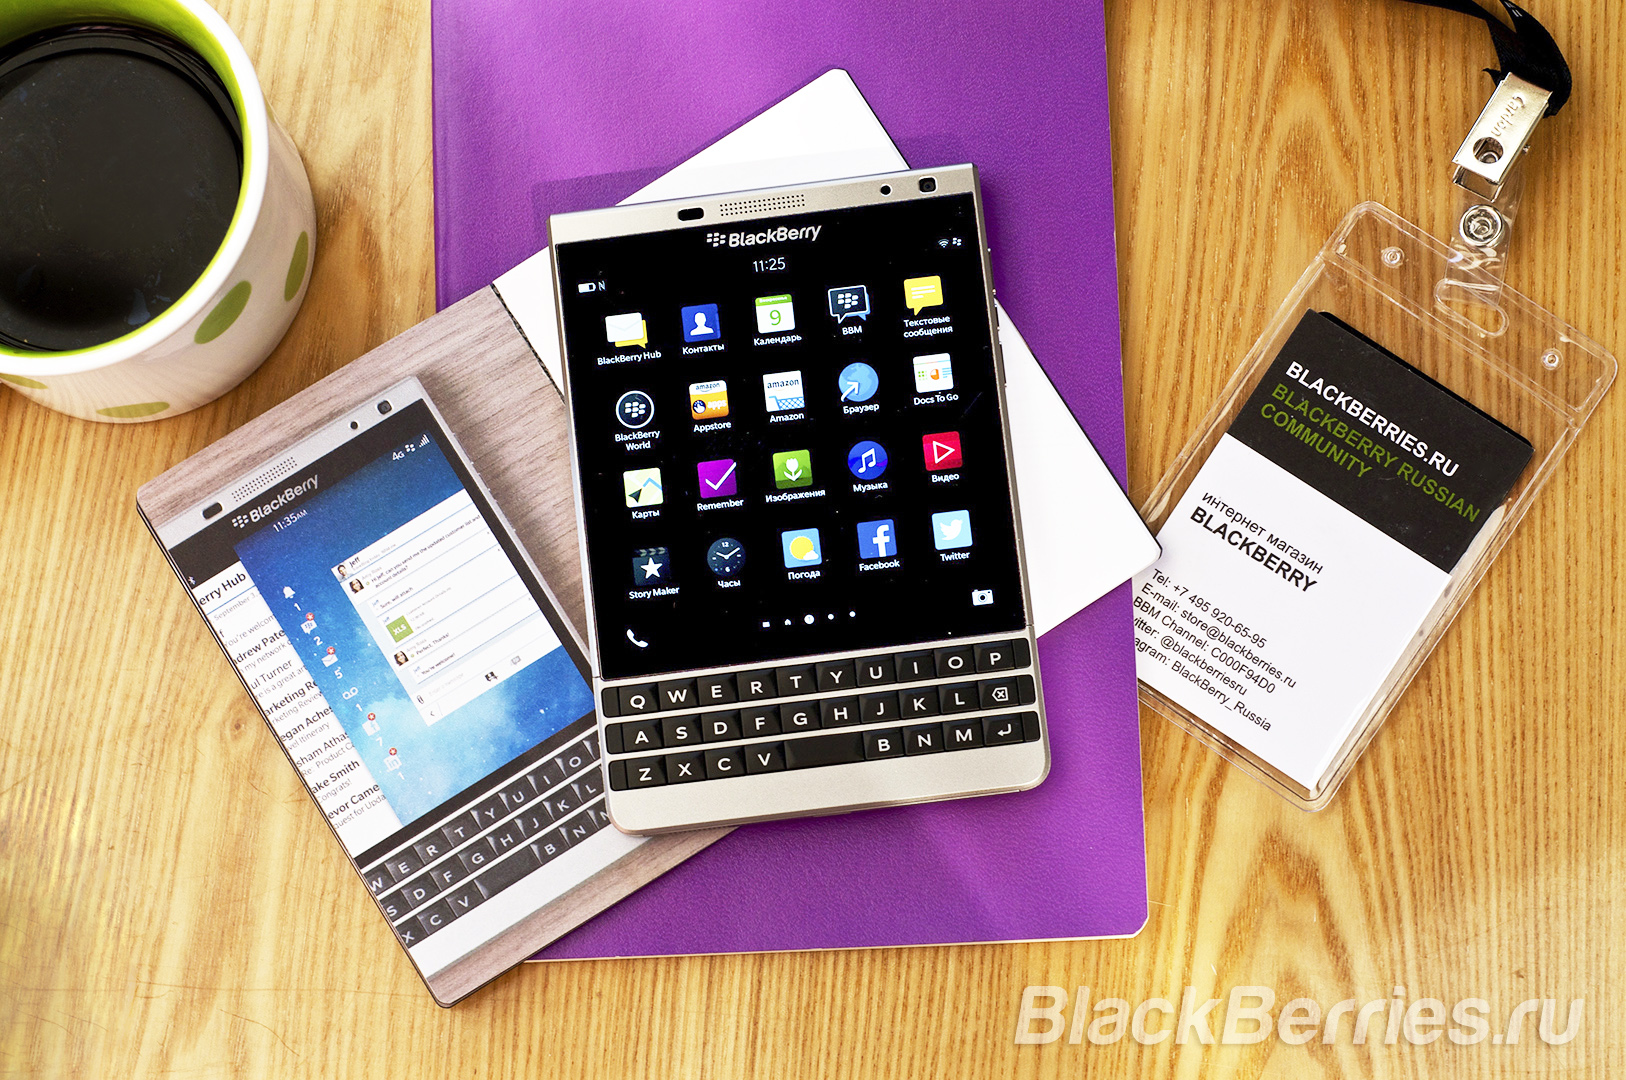 BlackBerry-Passport-Silver-Edition-Review-29